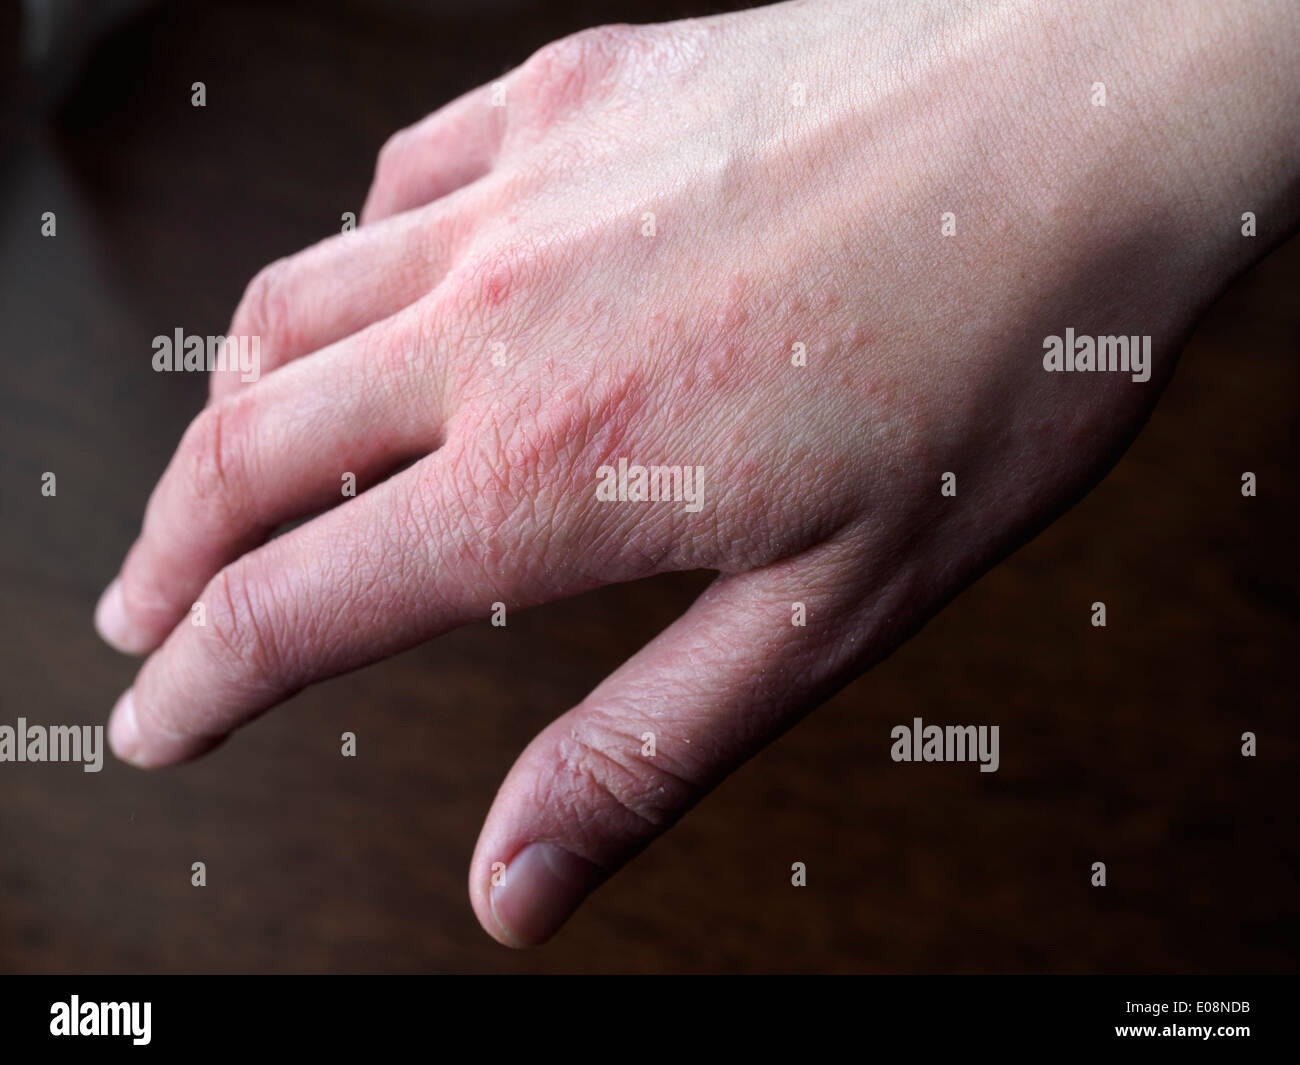 Hand with eczema Stock Photo